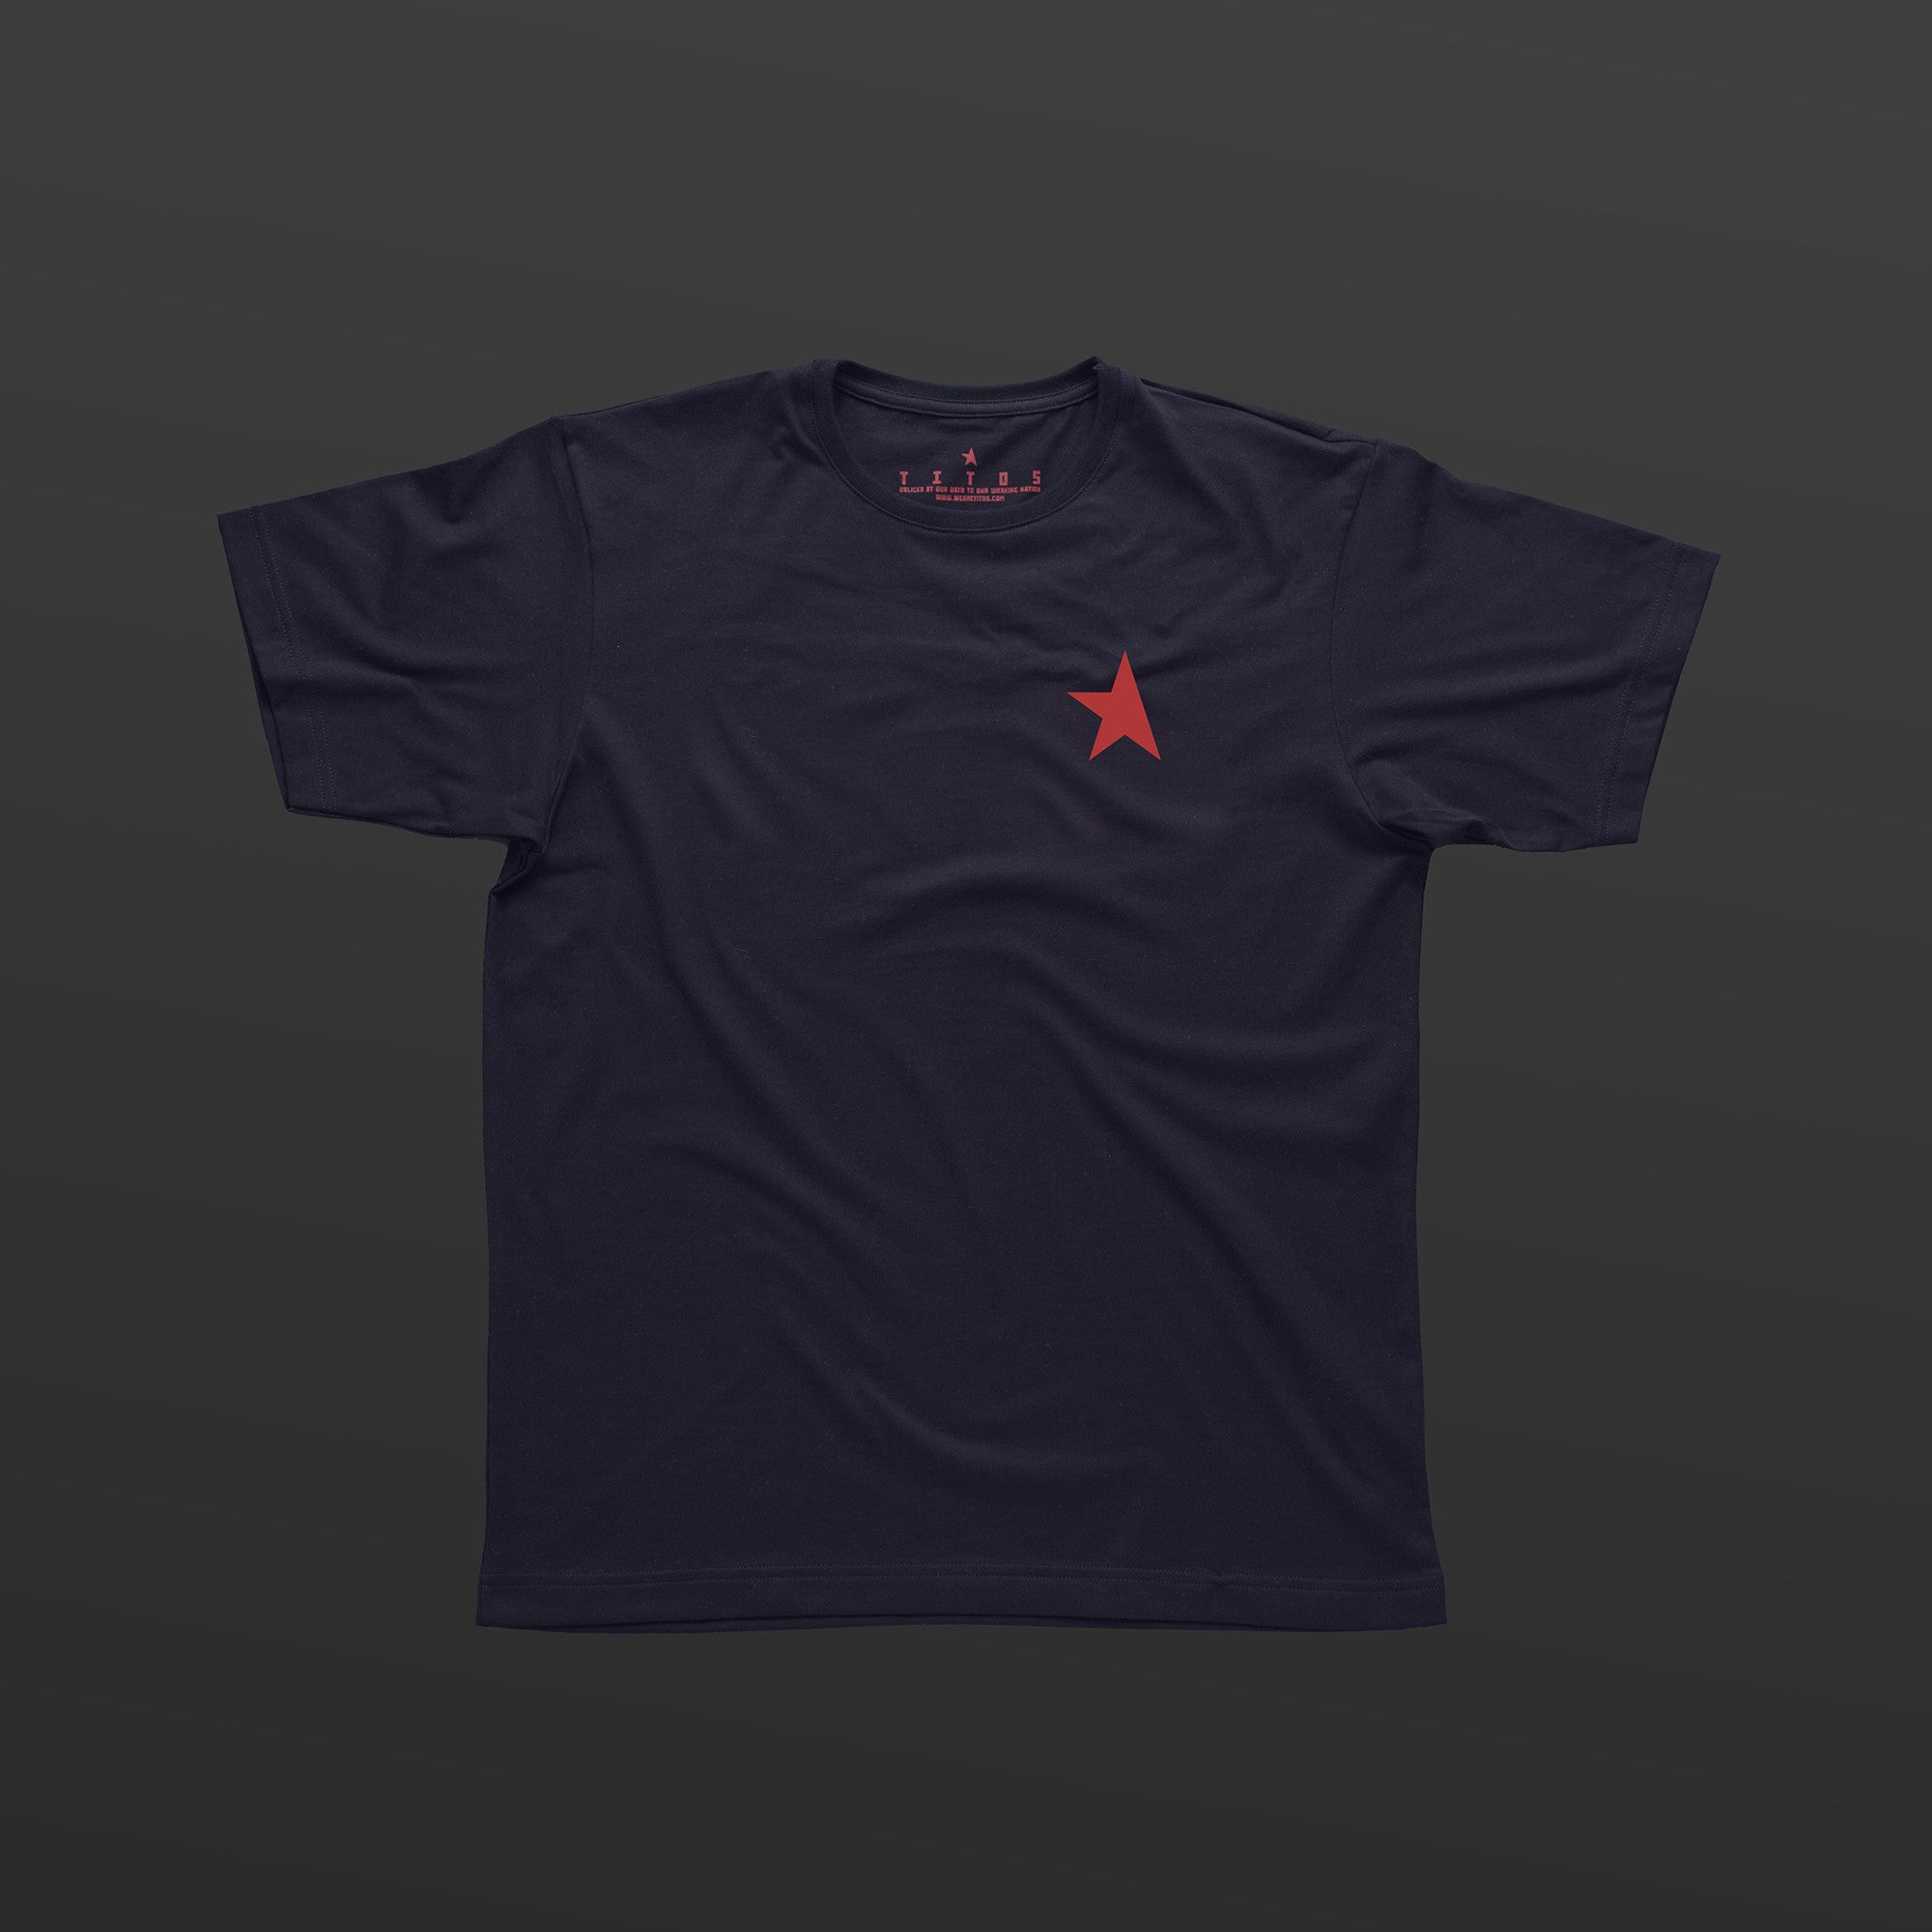 TITOS 17th t-shirt navy/red small star logo